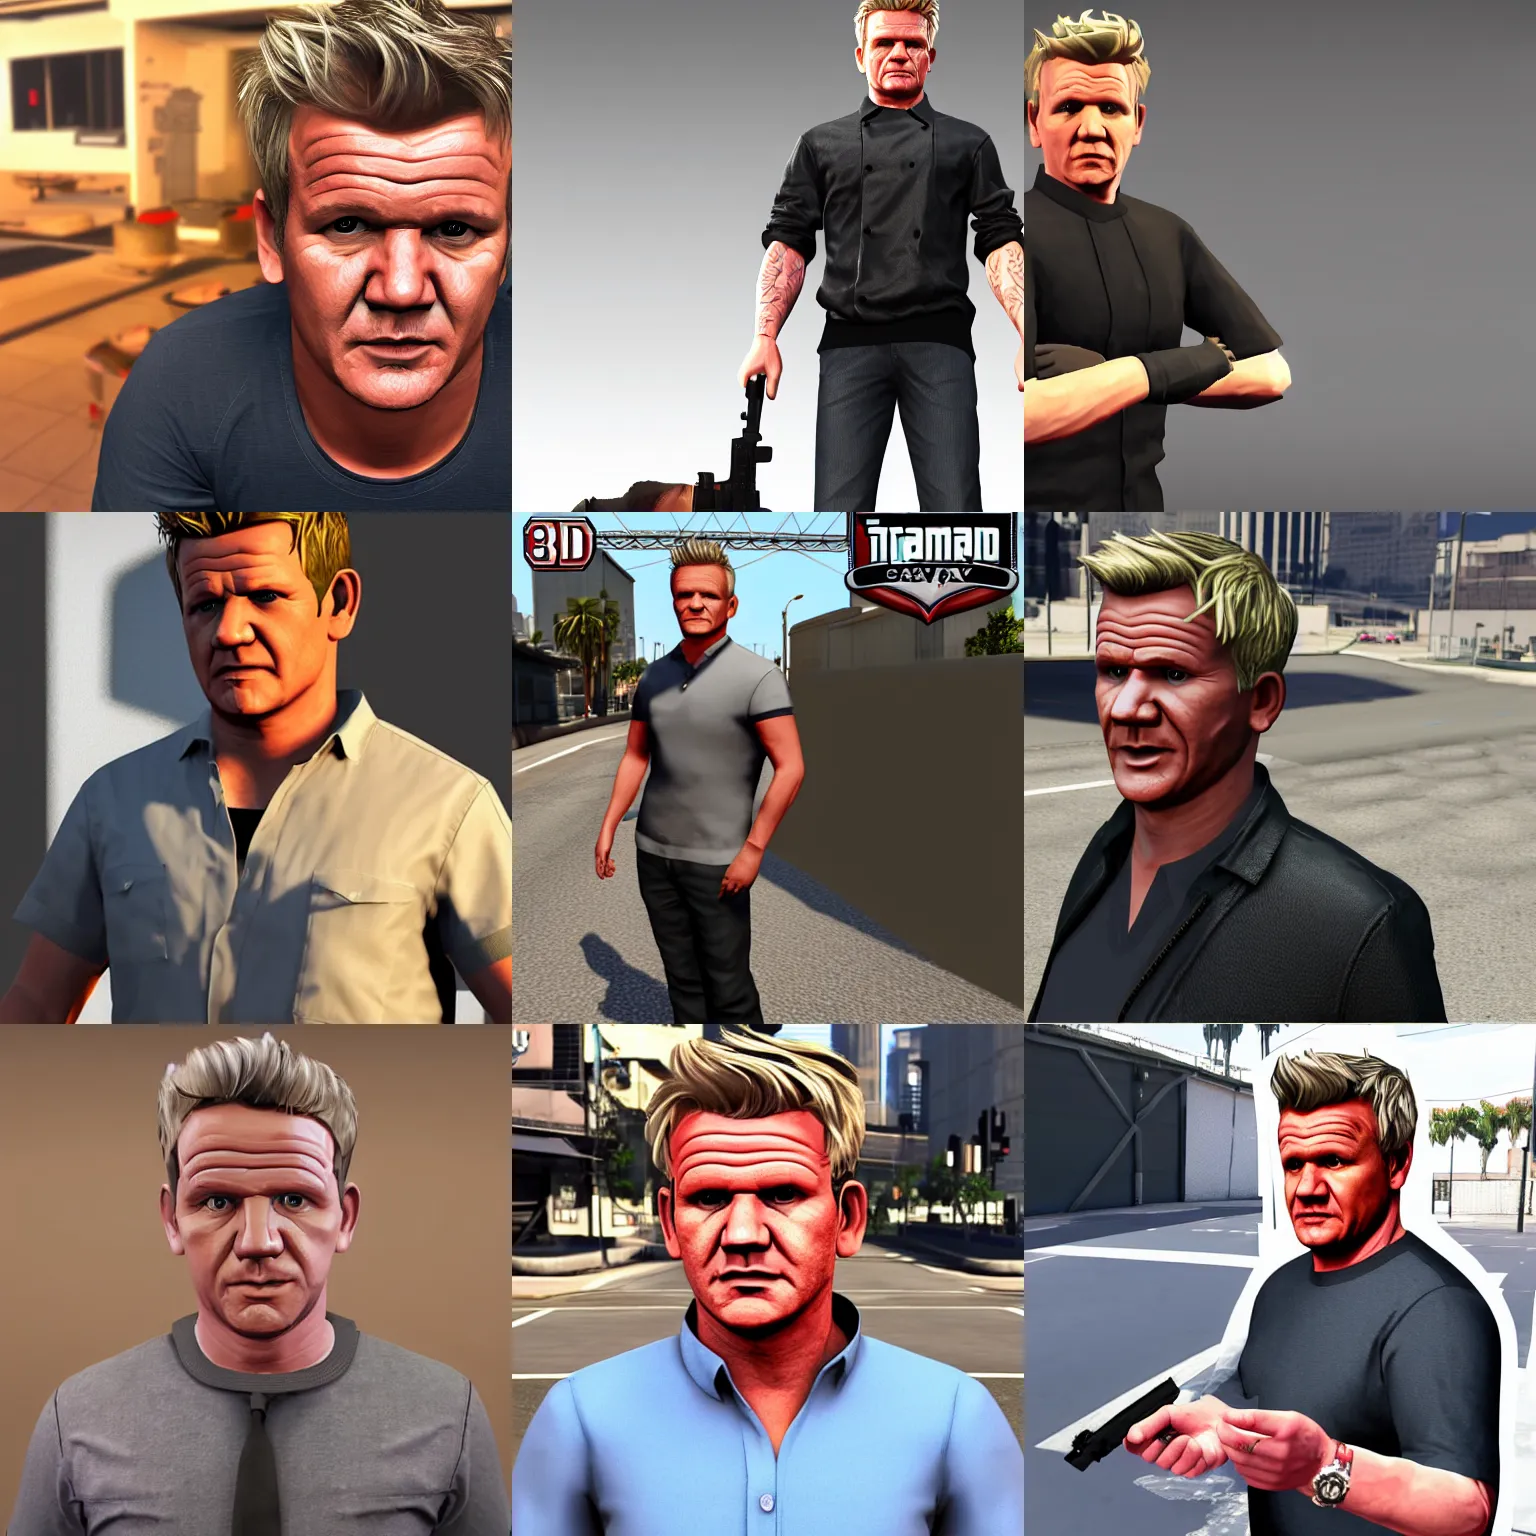 Prompt: Gordon Ramsay in Grand Theft Auto V, 3D model